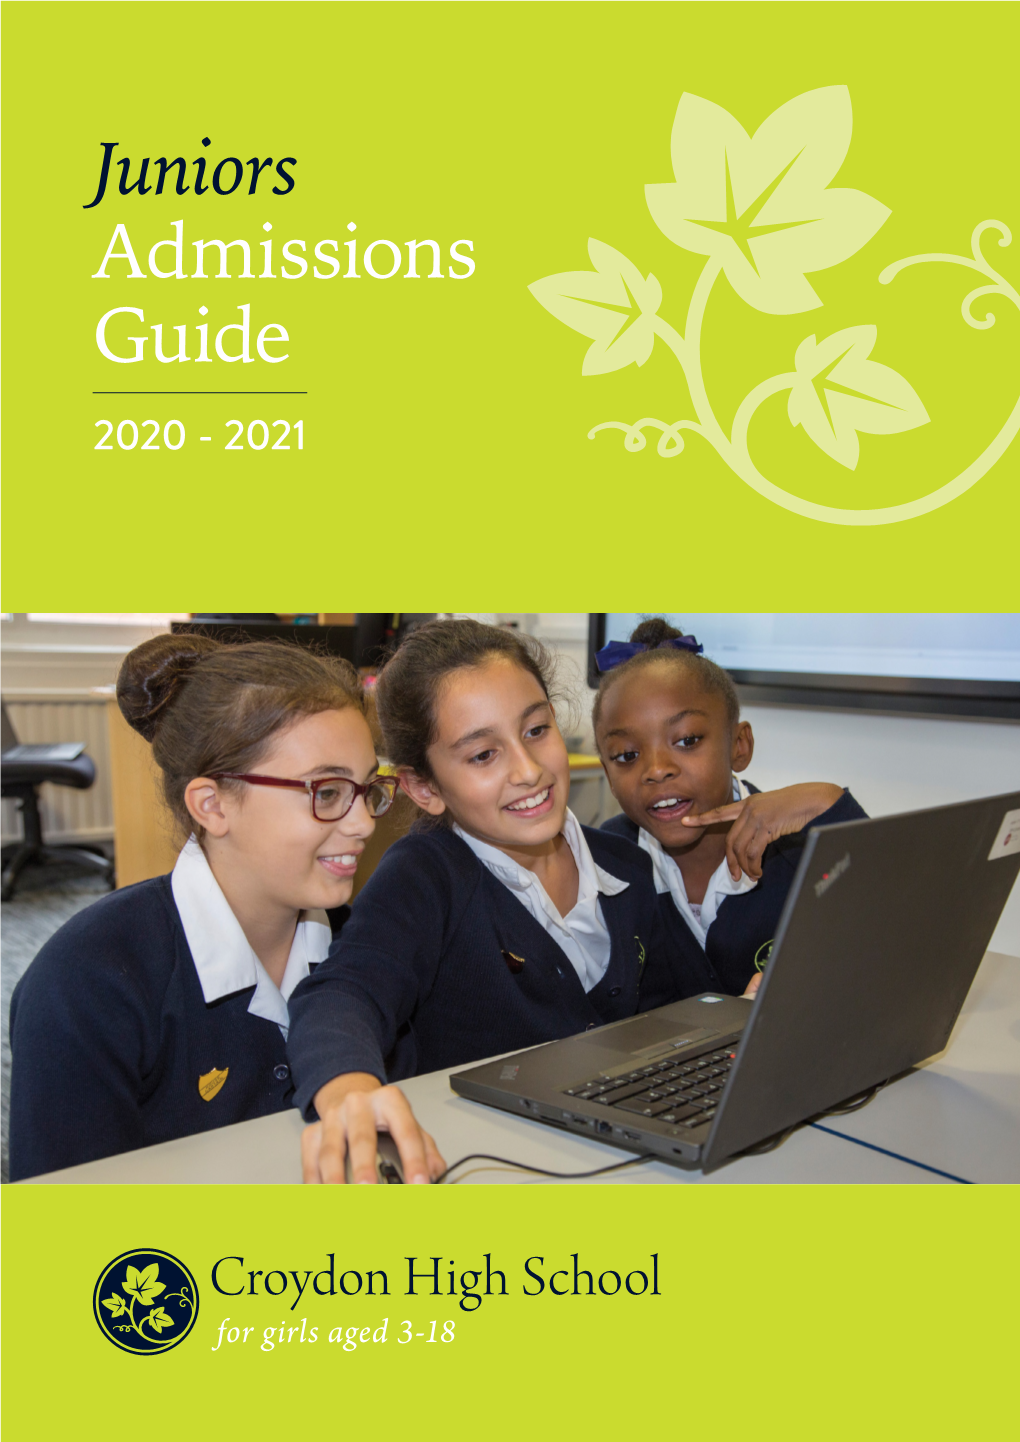 Juniors Admissions Guide 2020 - 2021